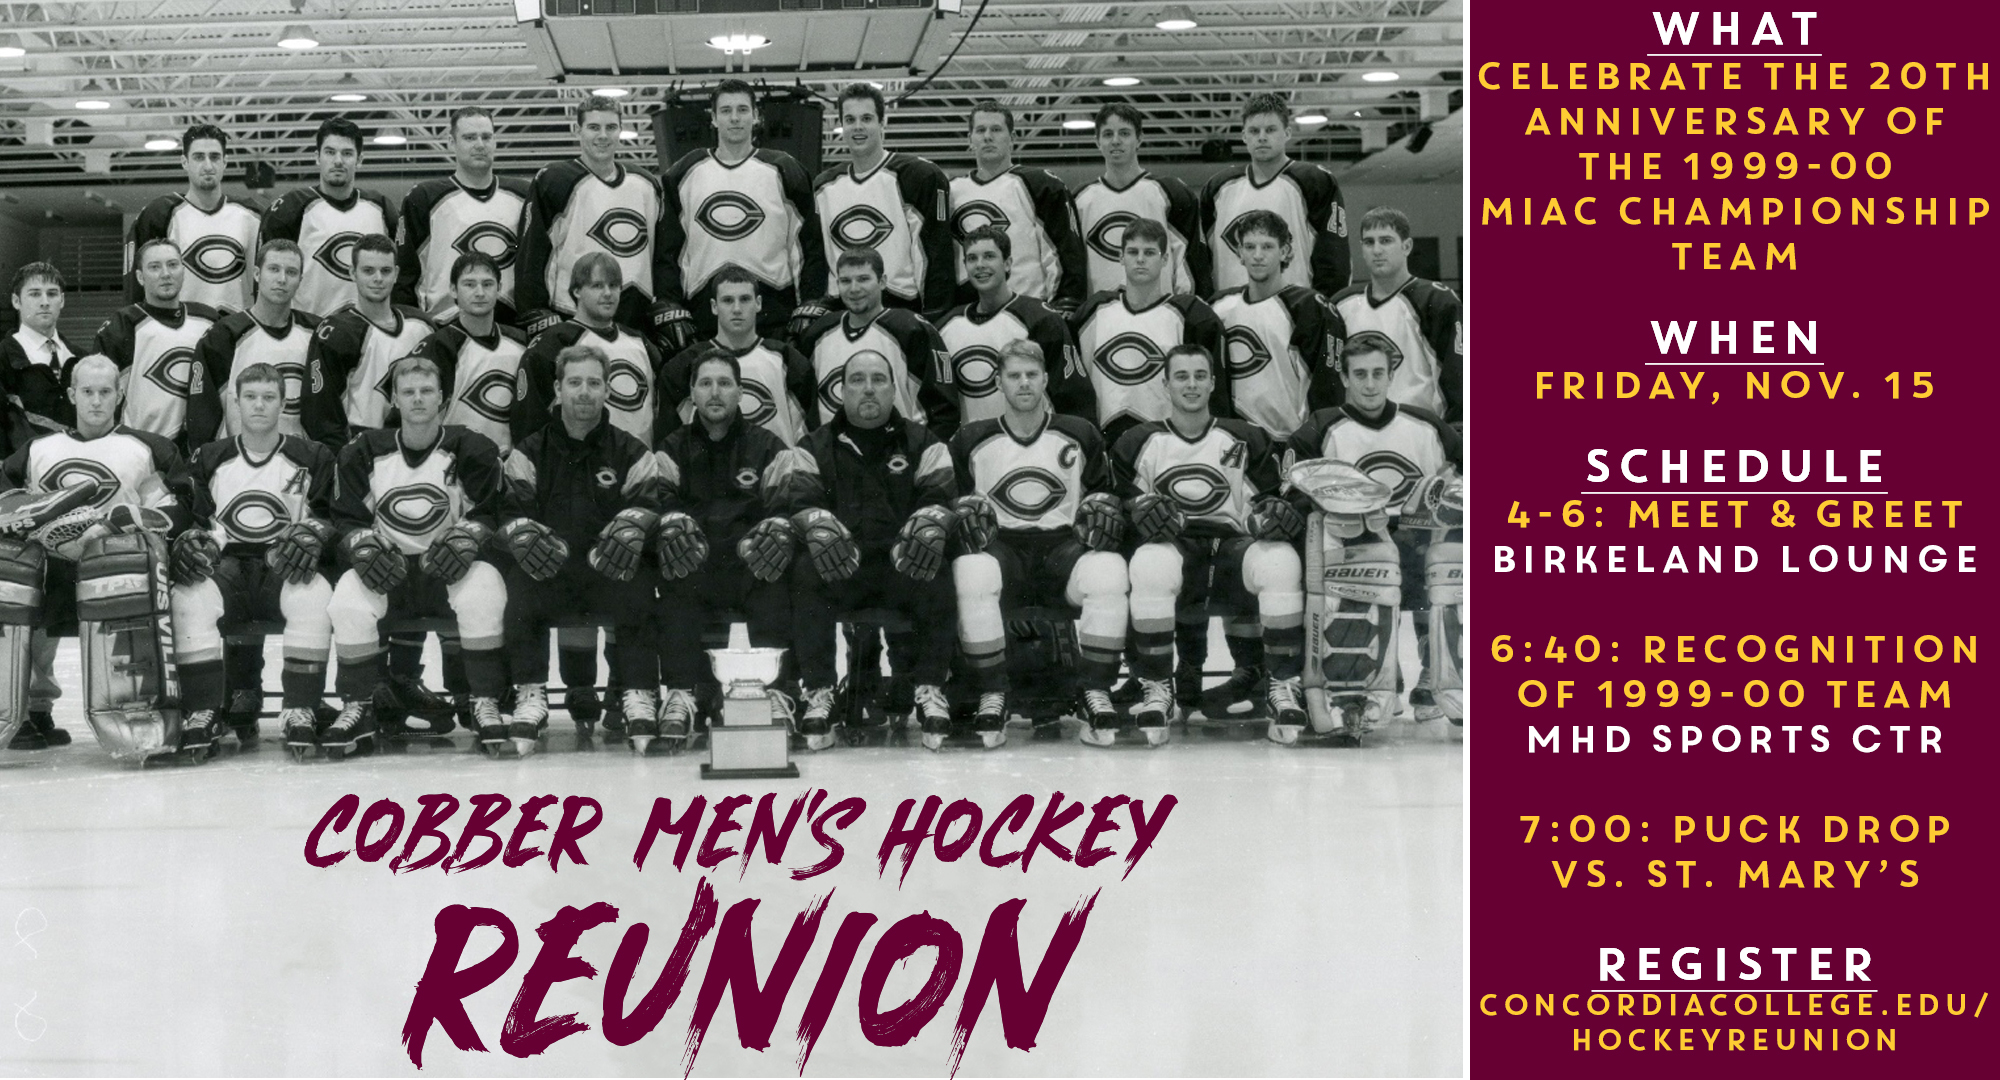 Cobber men's hockey reunion on Nov. 15.